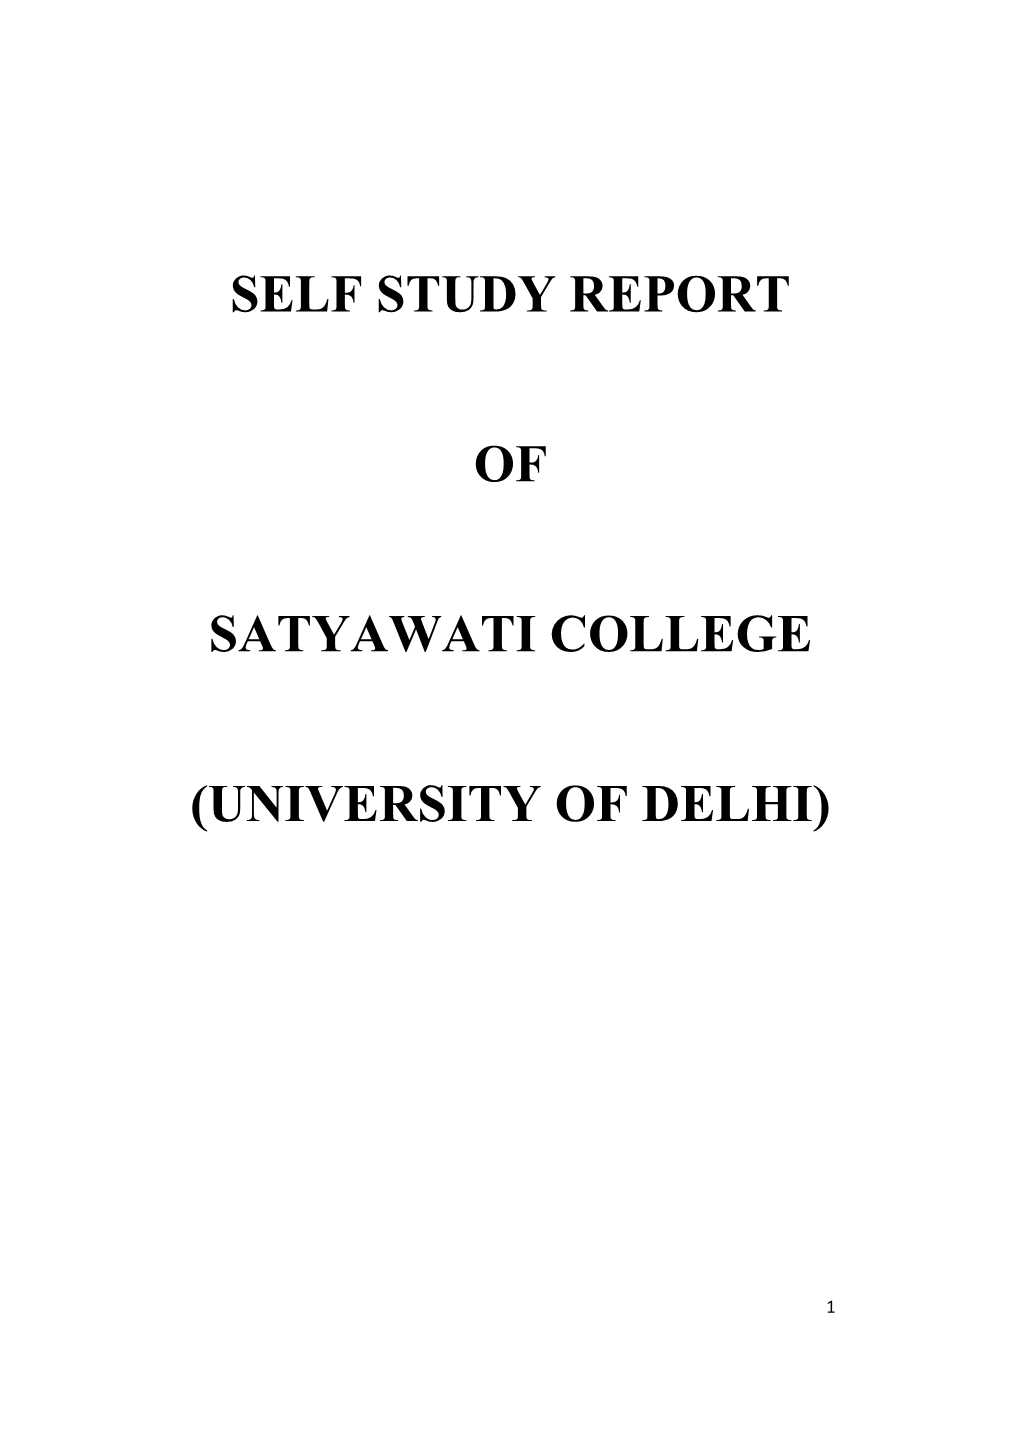 Self Study Report of Satyawati College